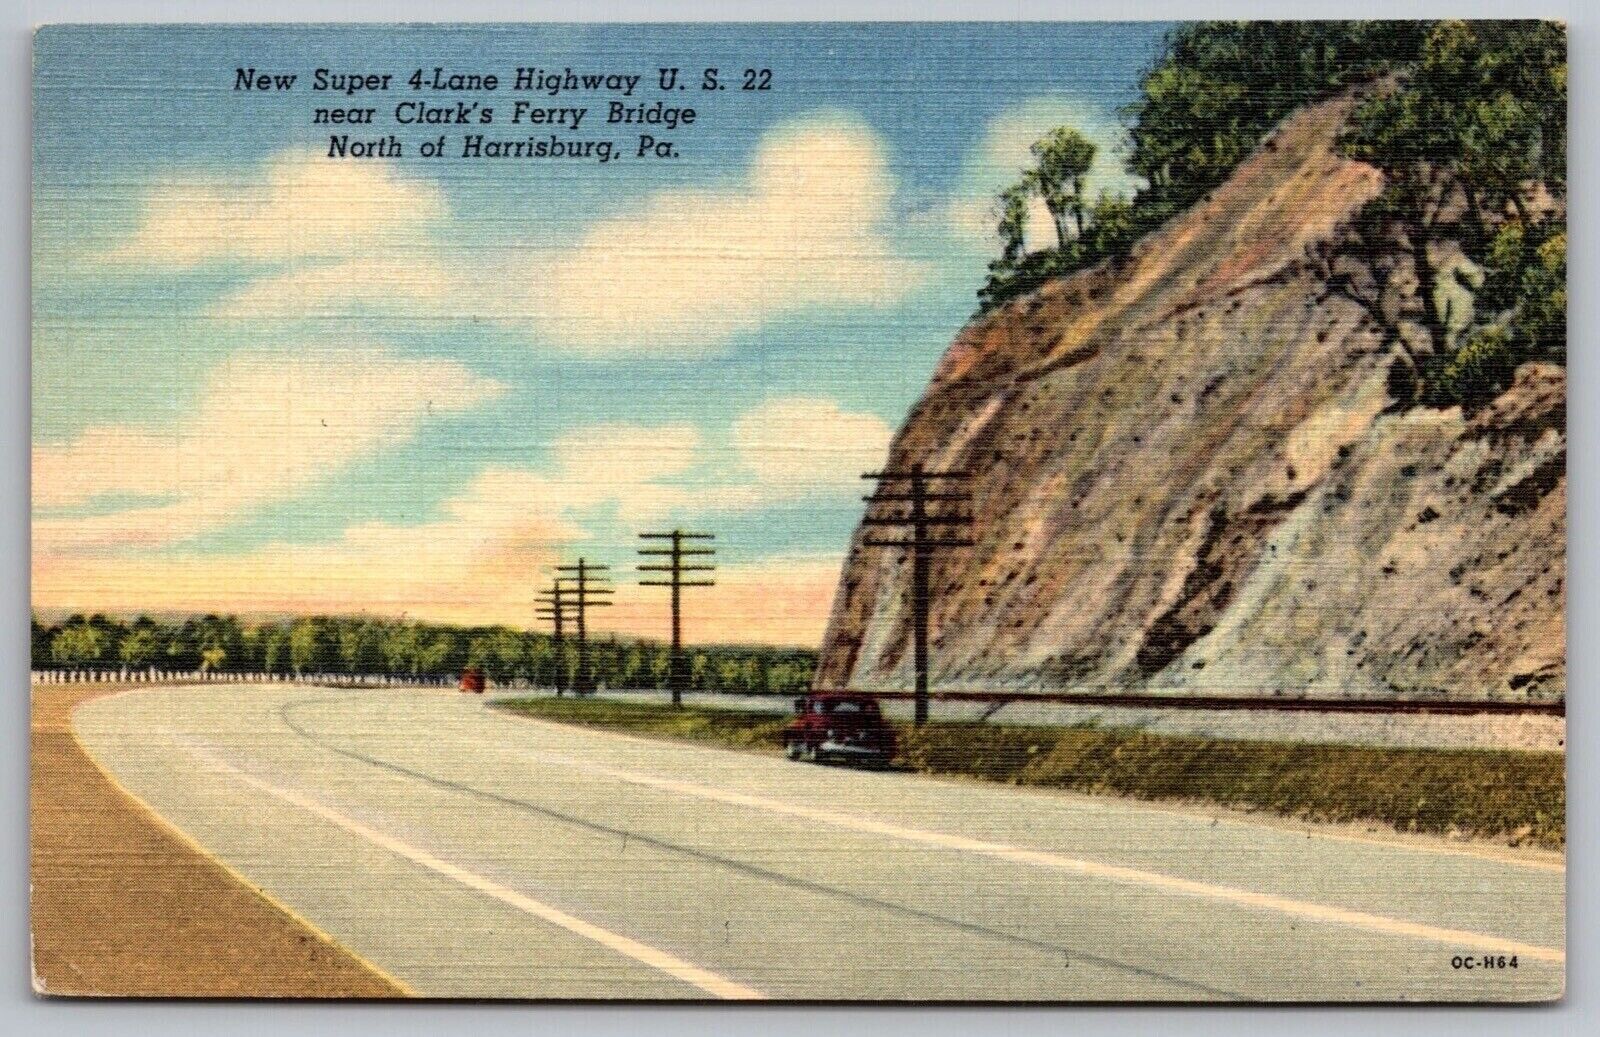 Super Four Lane Highway Clarks Ferry Bridge Harrisburg Pennsylvania UNP Postcard